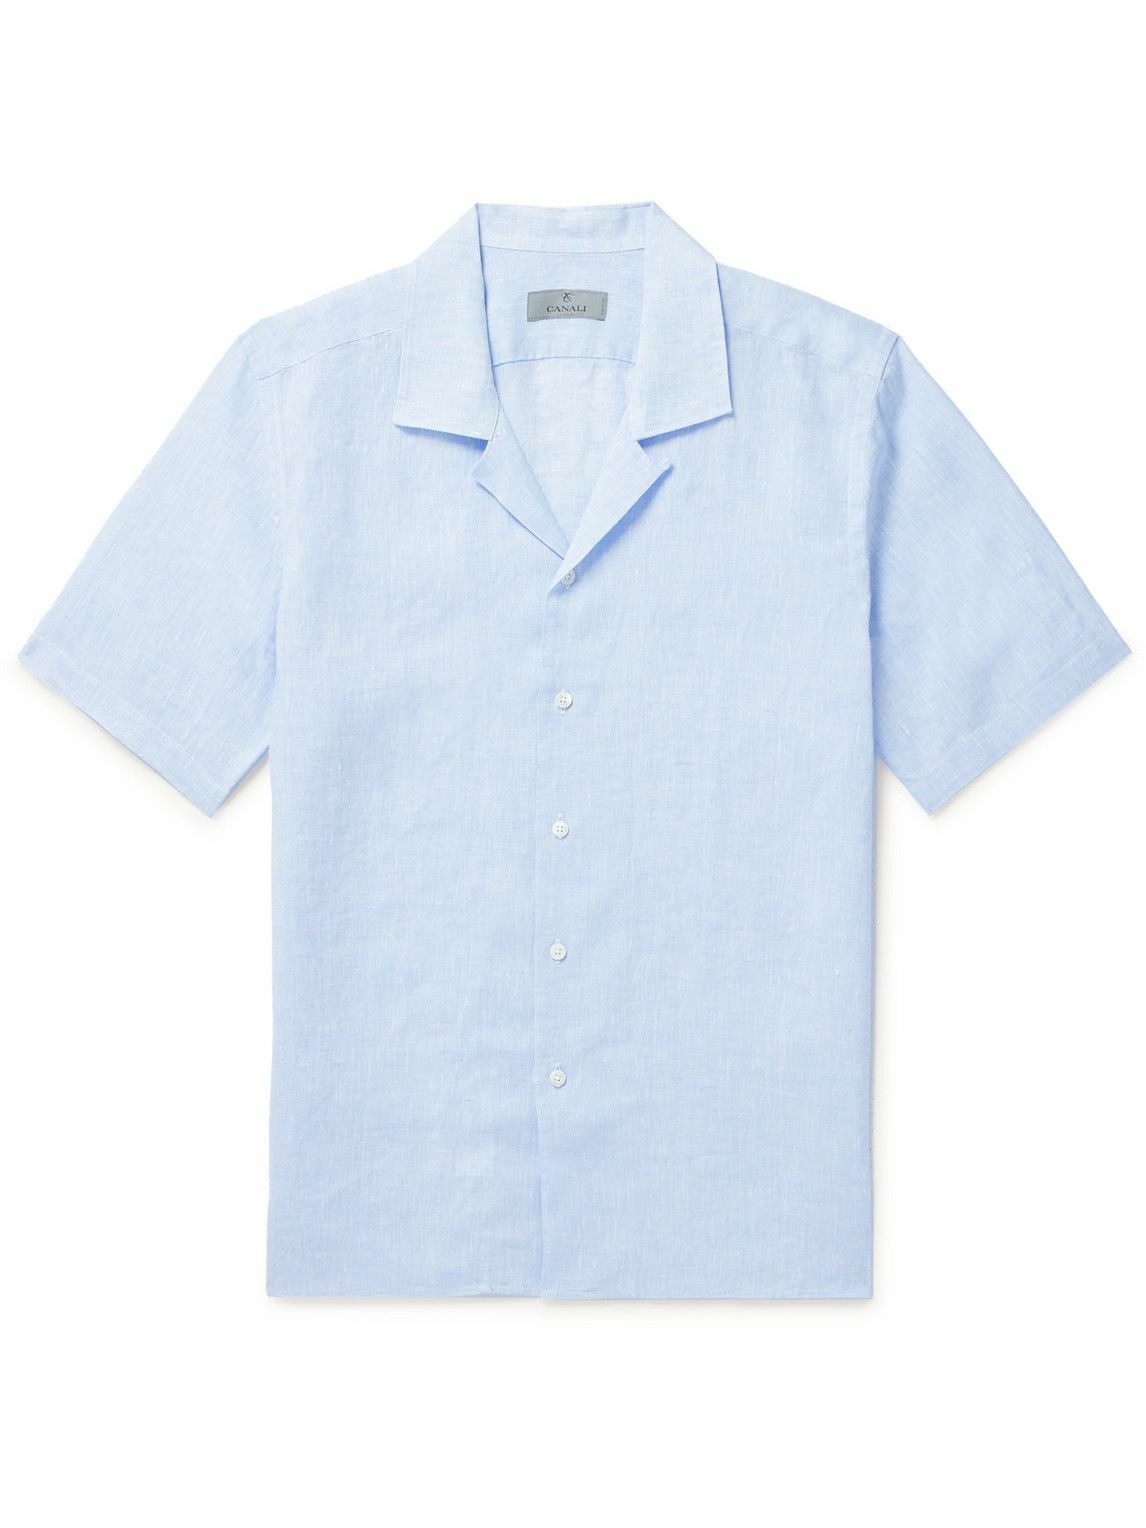 Canali - Camp-Collar Linen Shirt - Blue Canali